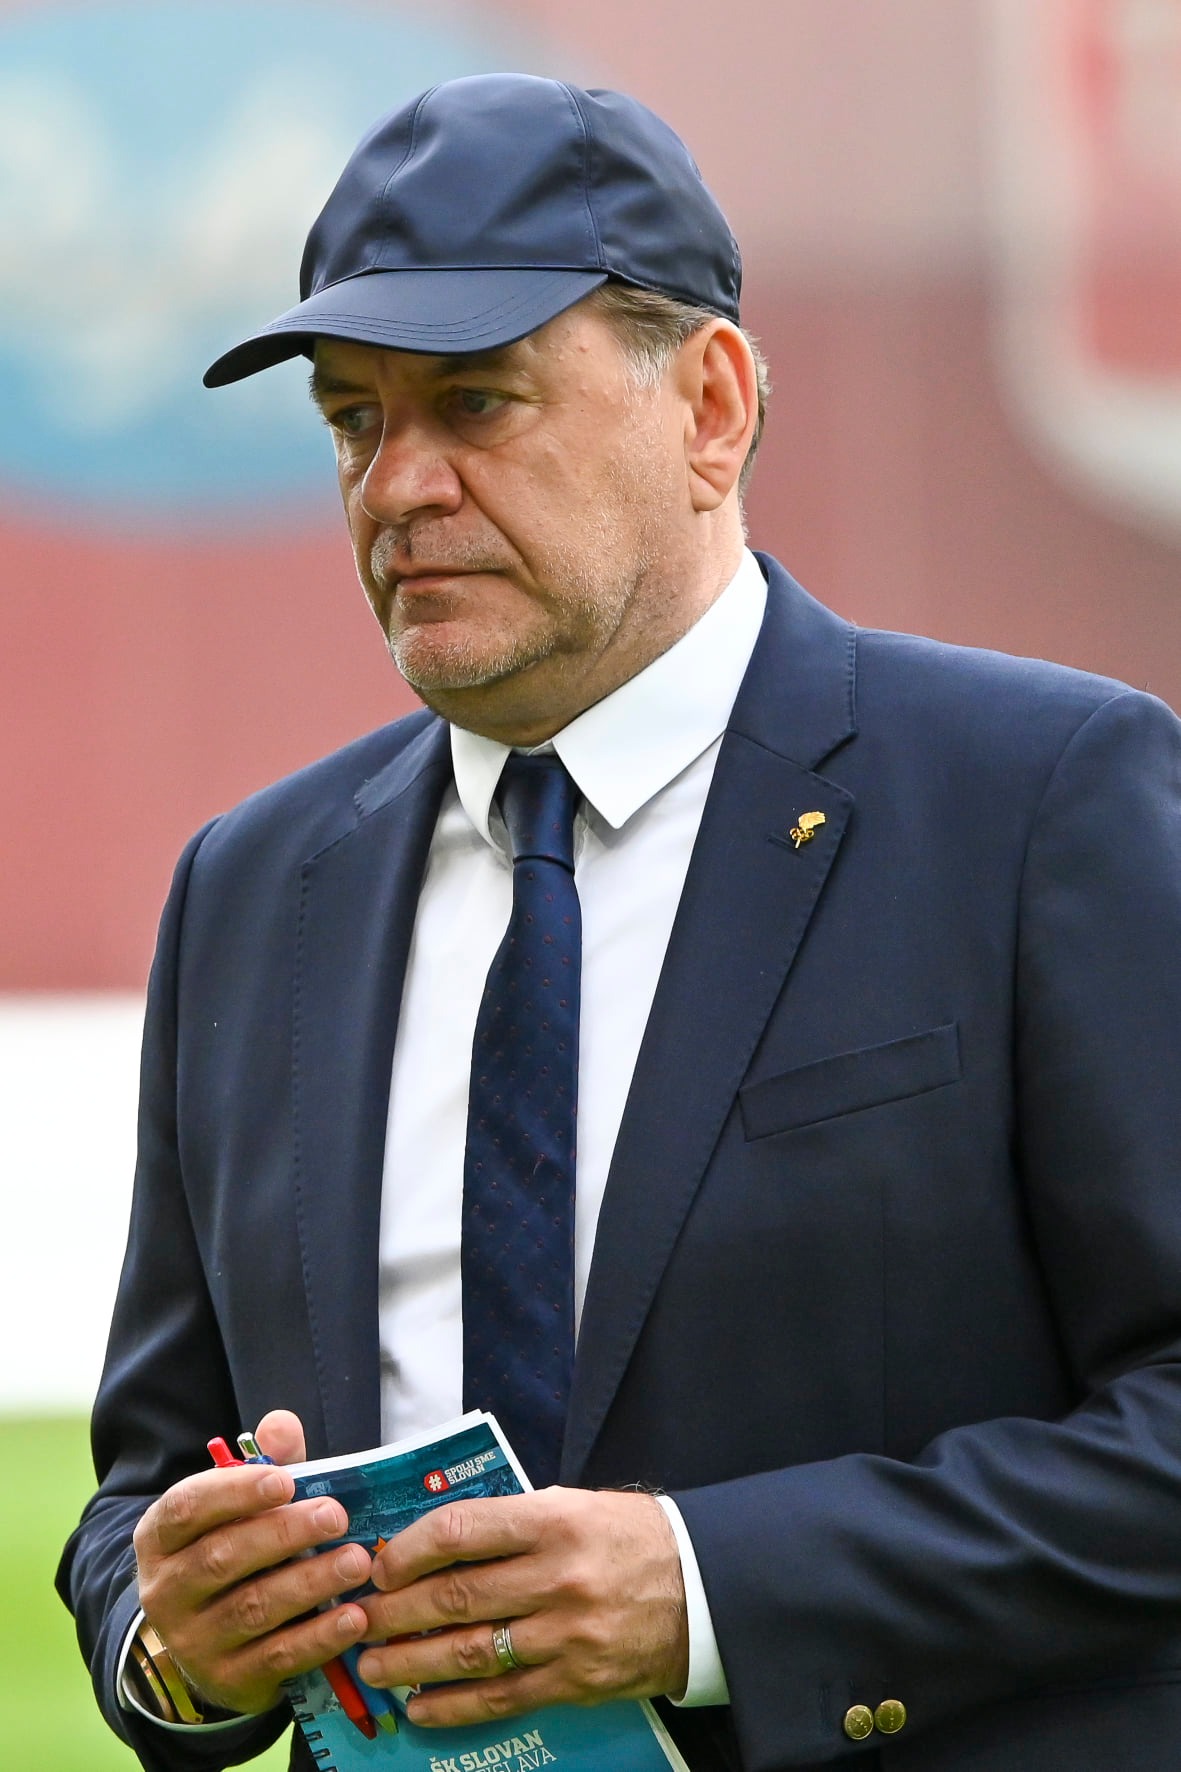 Vladimír Weiss st.